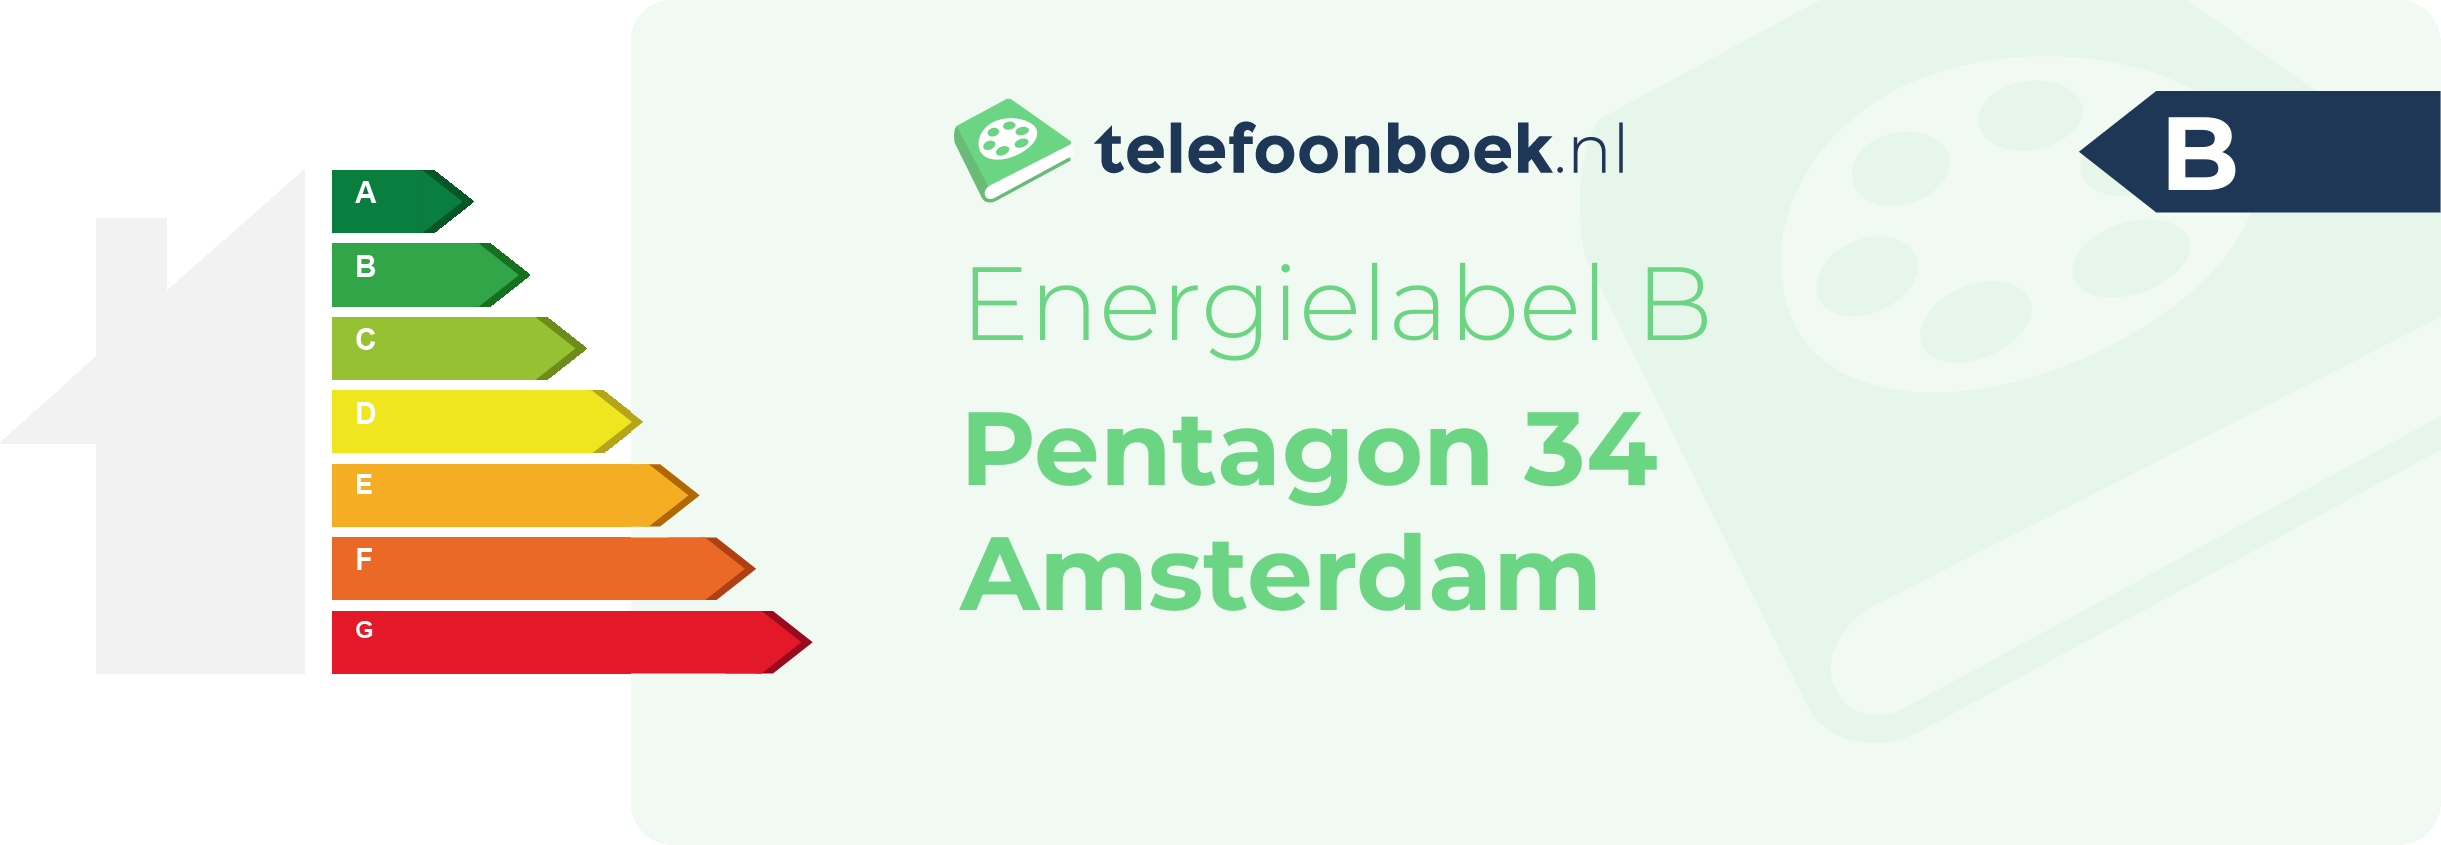 Energielabel Pentagon 34 Amsterdam